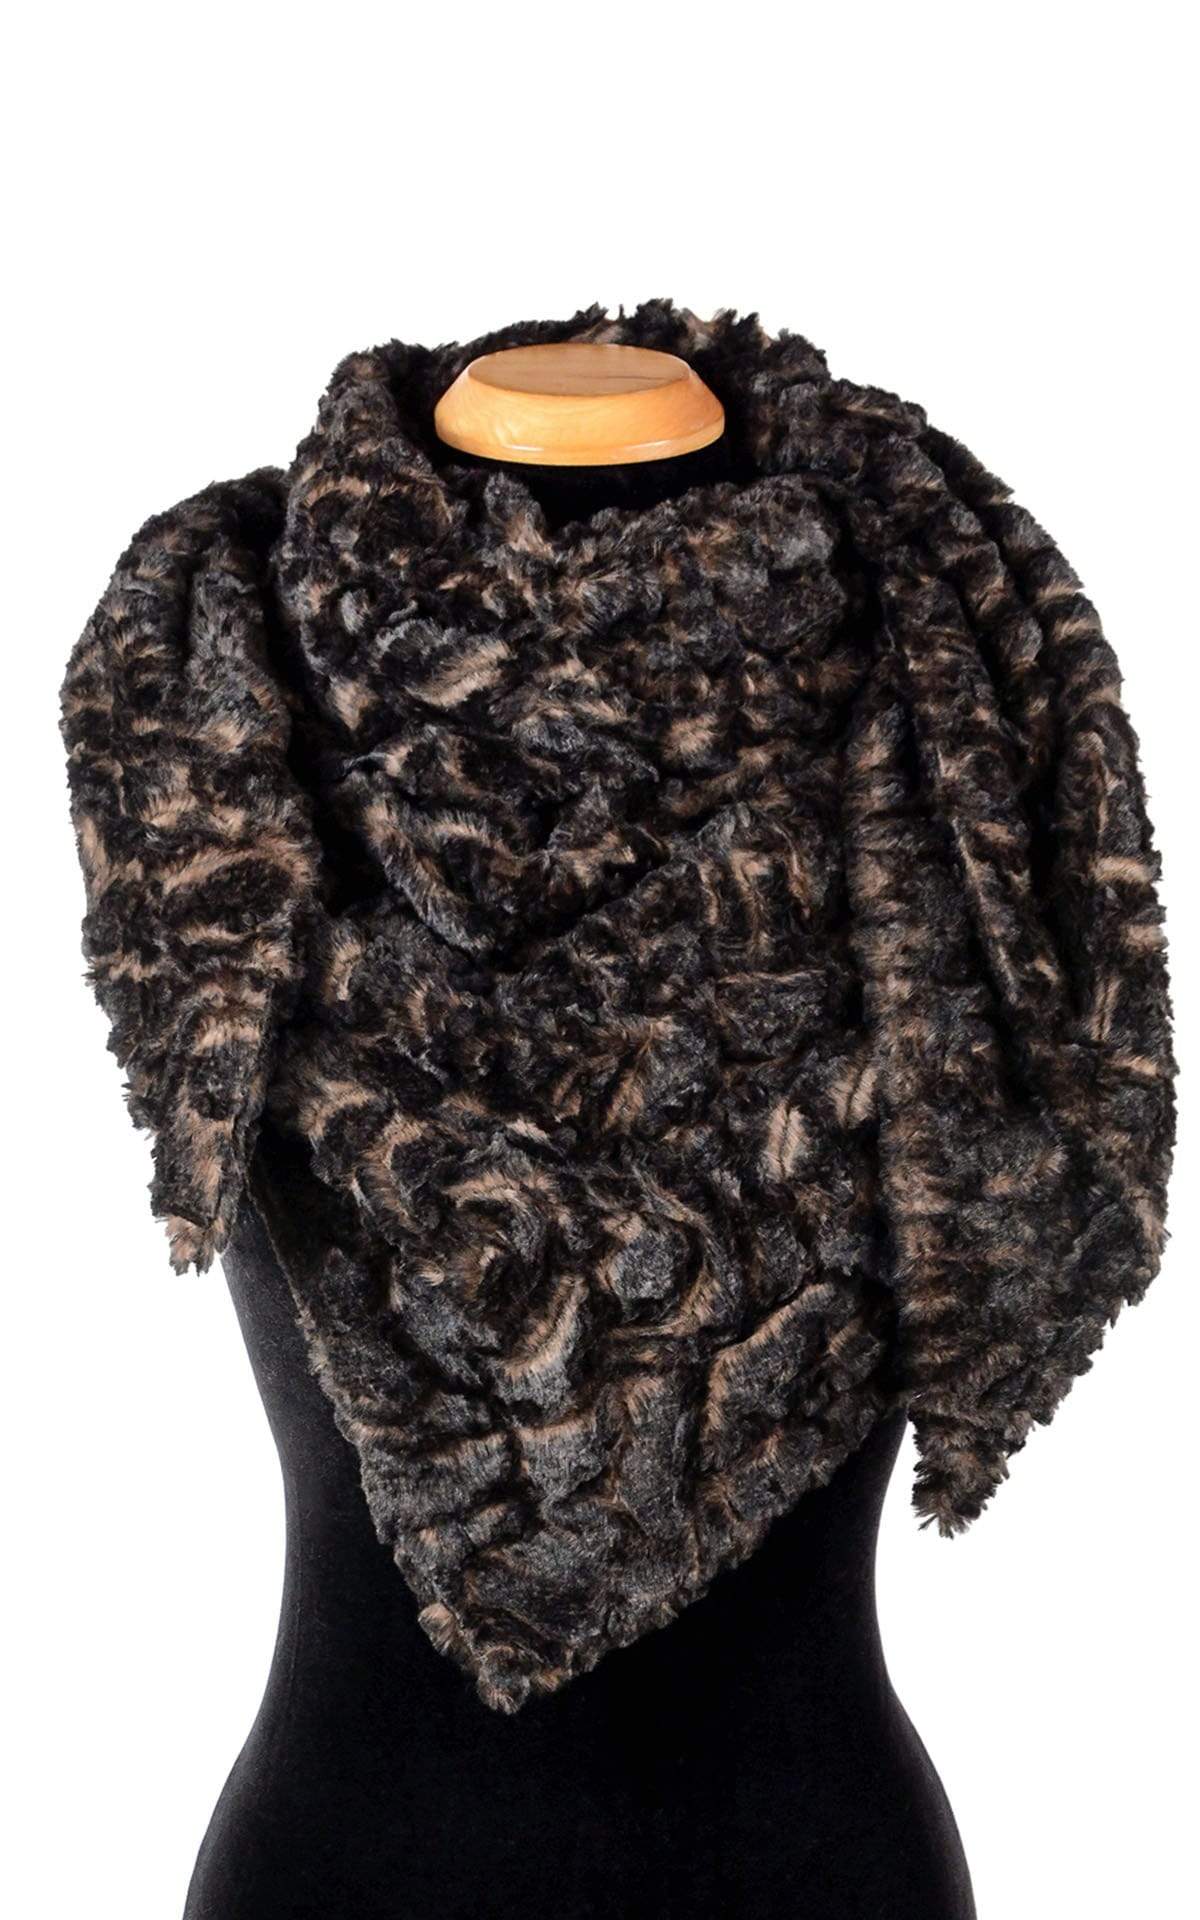 Bermuda triangle scarf | Vintage Rose faux fur, Espresso, Dark Brown, Rustandmade by Pandemonium Millinery Seattle, WA USA